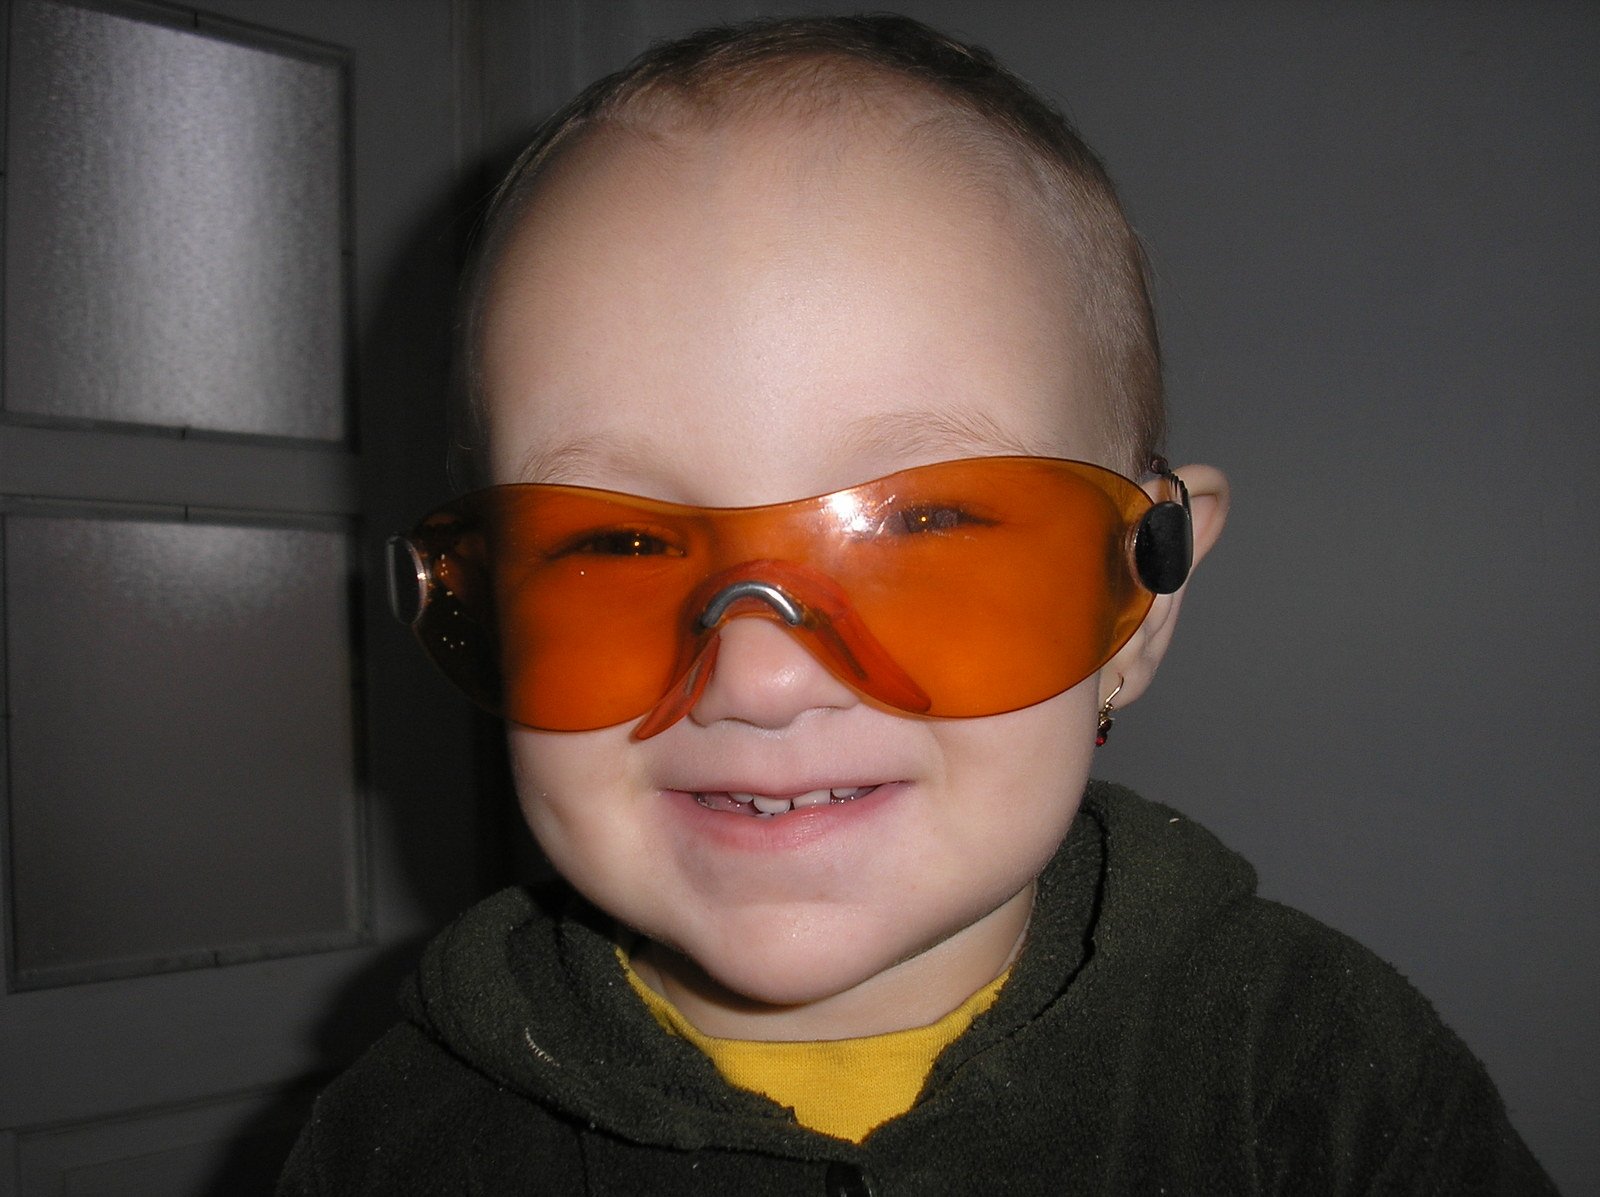 a bald headed boy wearing an orange safety glasses